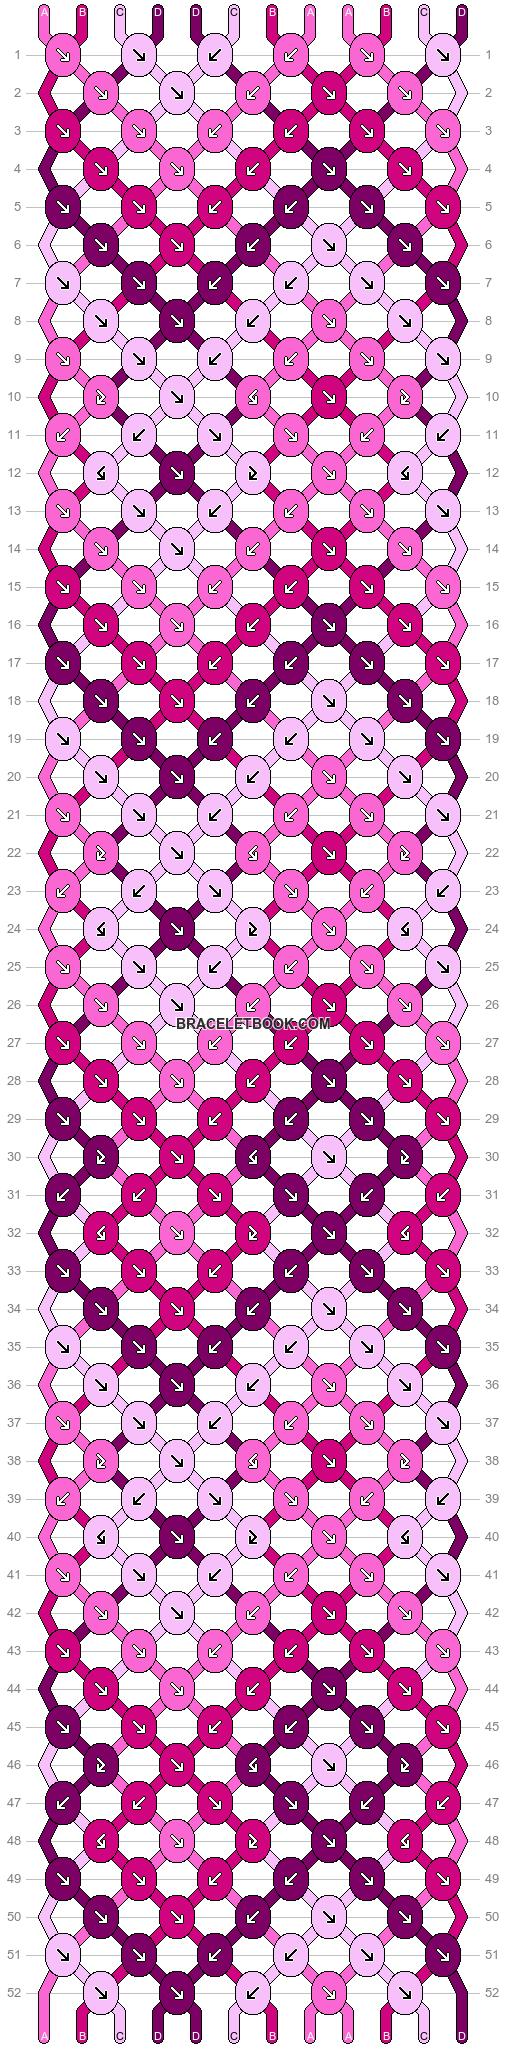 Normal pattern #24990 pattern